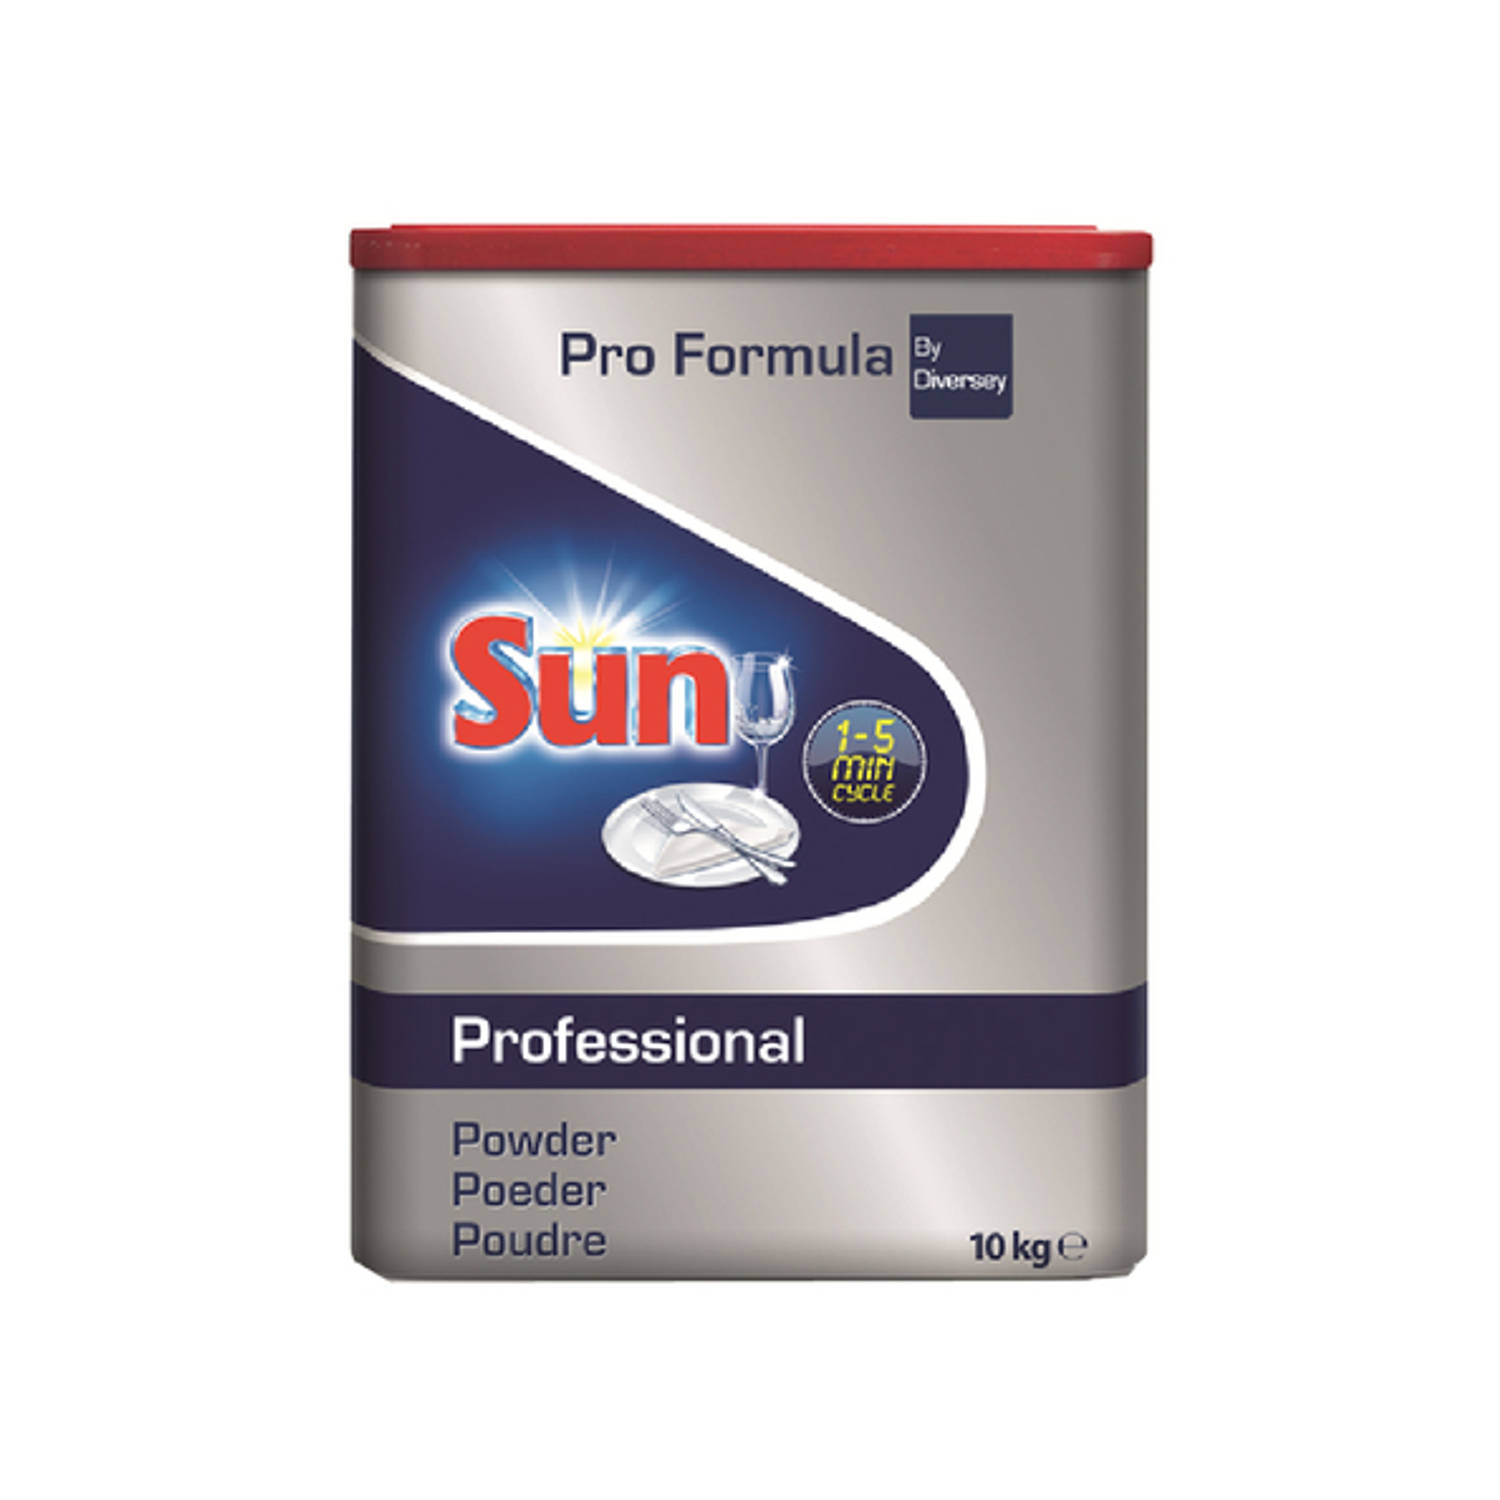 Vaatwaspoeder Sun Pro Formula normaal 10kg